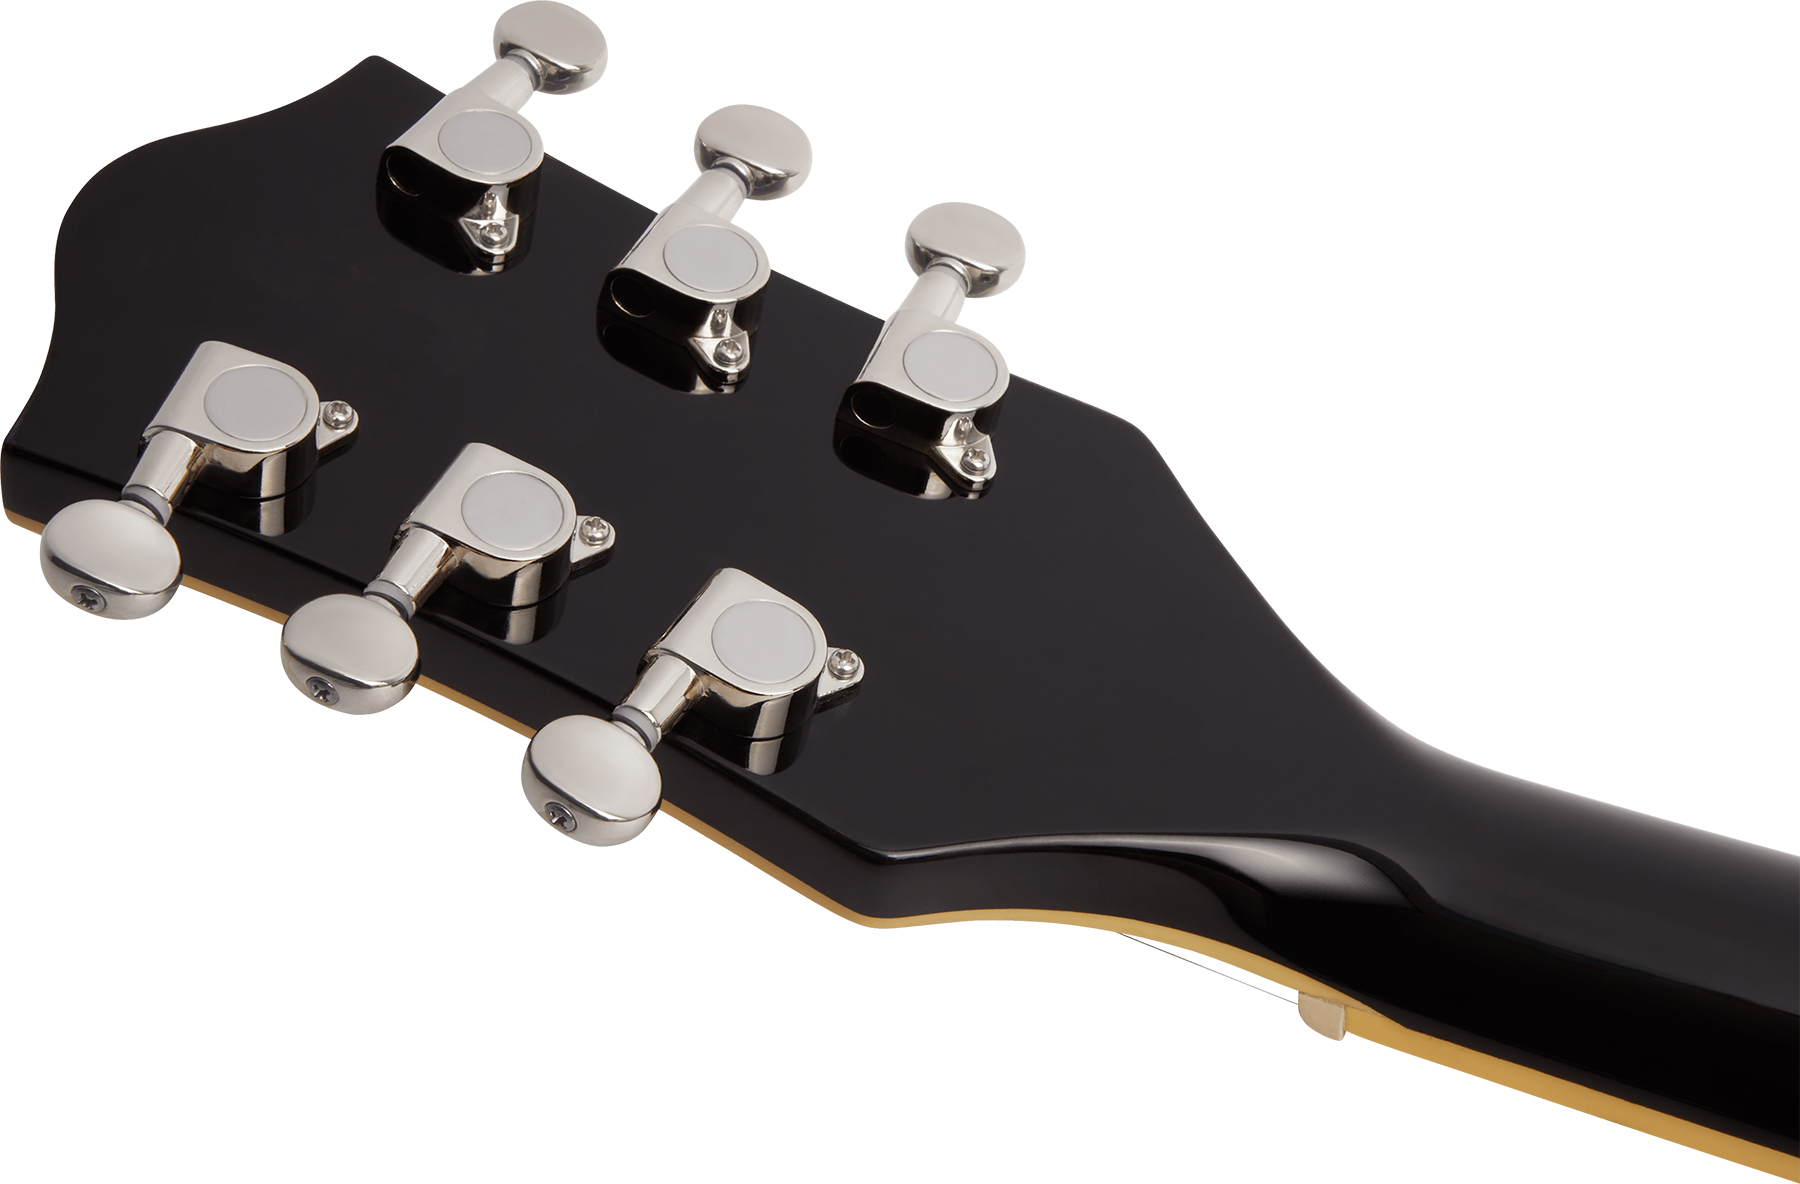 Gretsch G5622 Center Bloc Double Cut V-stoptail Electromatic Hh Ht Lau - Black Gold - Semi hollow elektriche gitaar - Variation 3